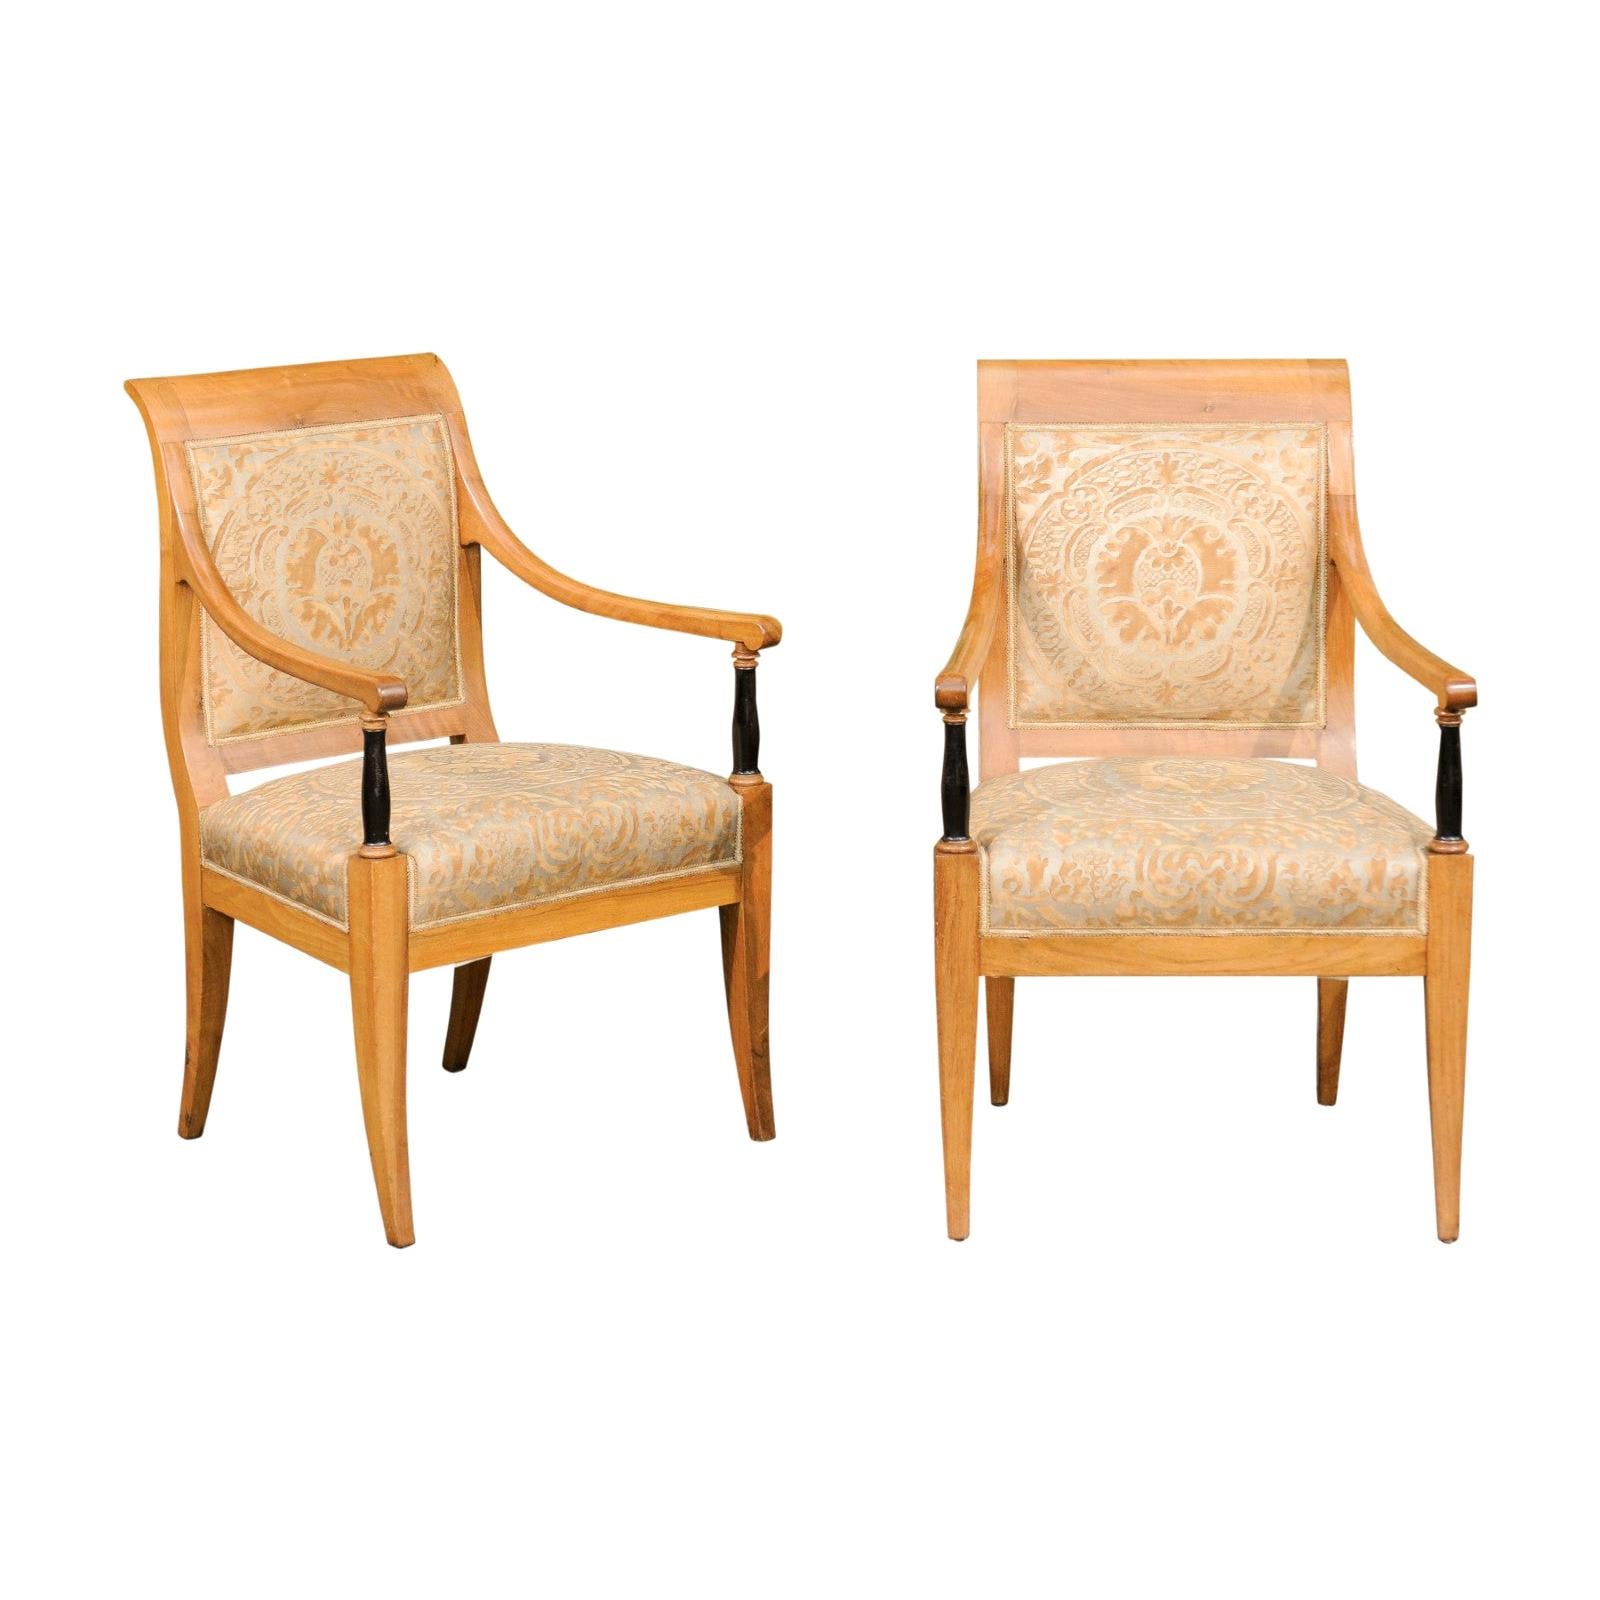 Pair of 1840s Austrian Biedermeier Ebonized Columns Chairs with Fortuny Fabric